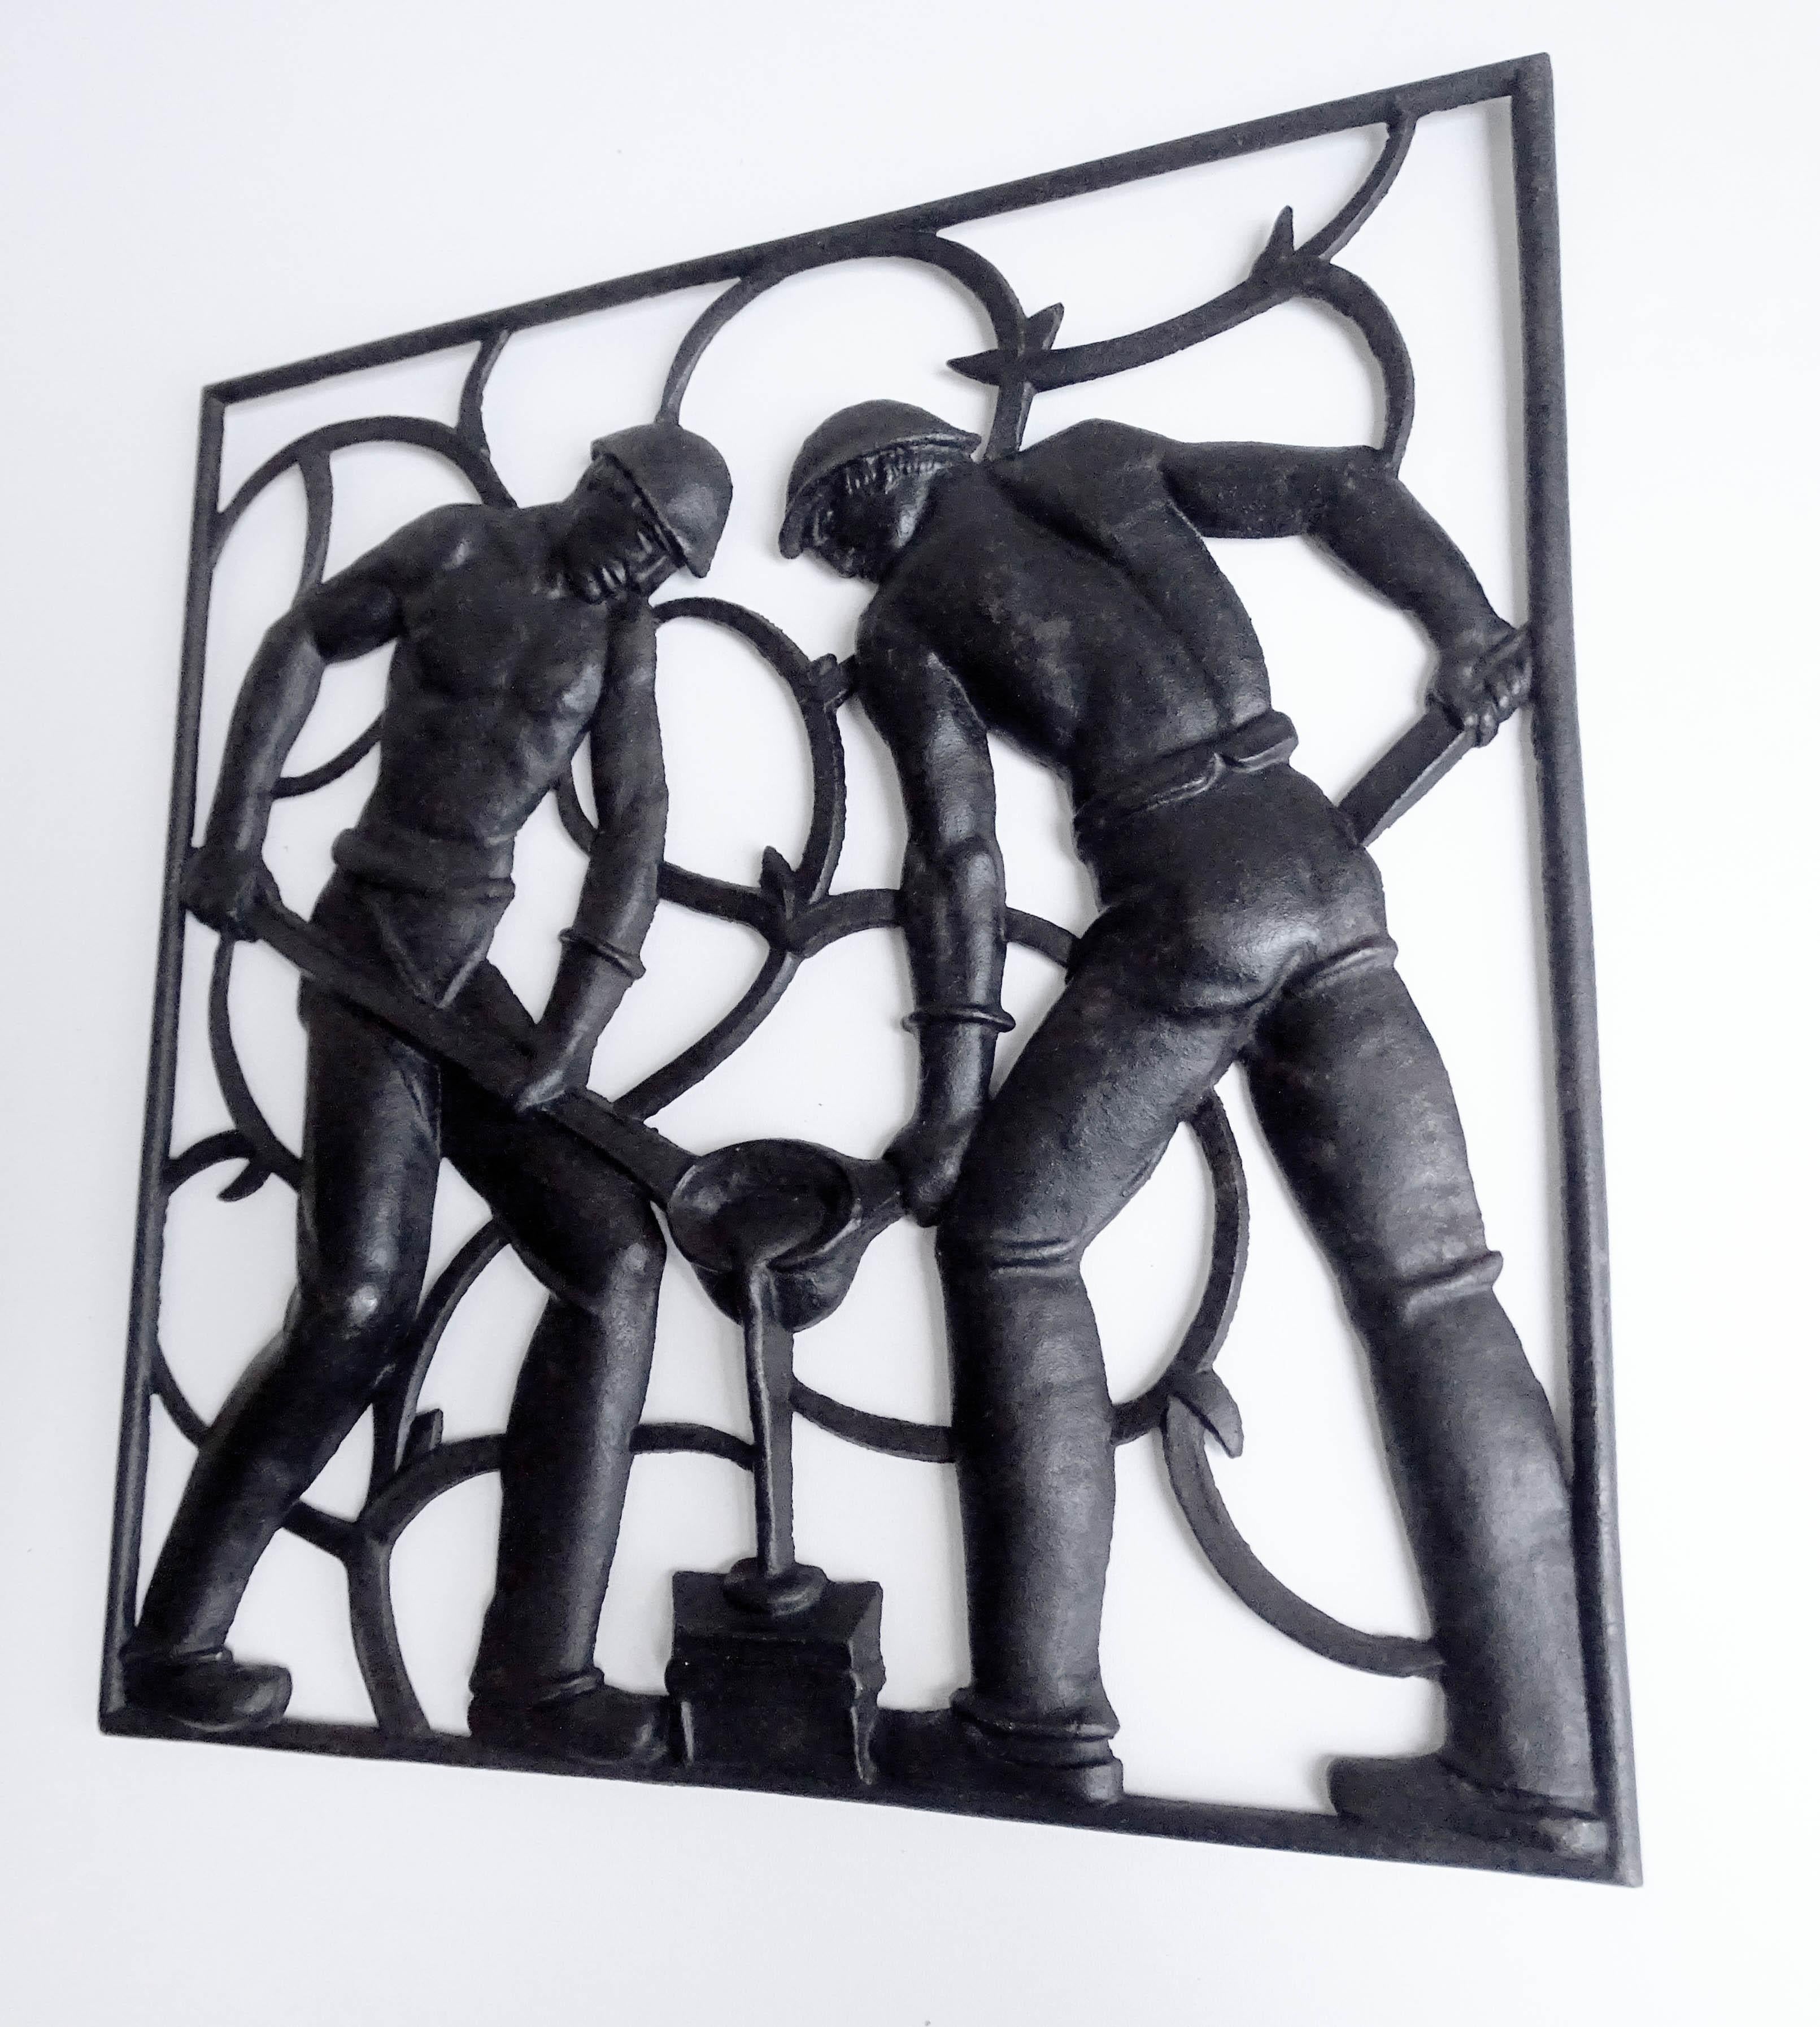 Art Deco Wall Sculpture Miner Nude Men Cast Iron , 1930s Modernist Design (Art déco)